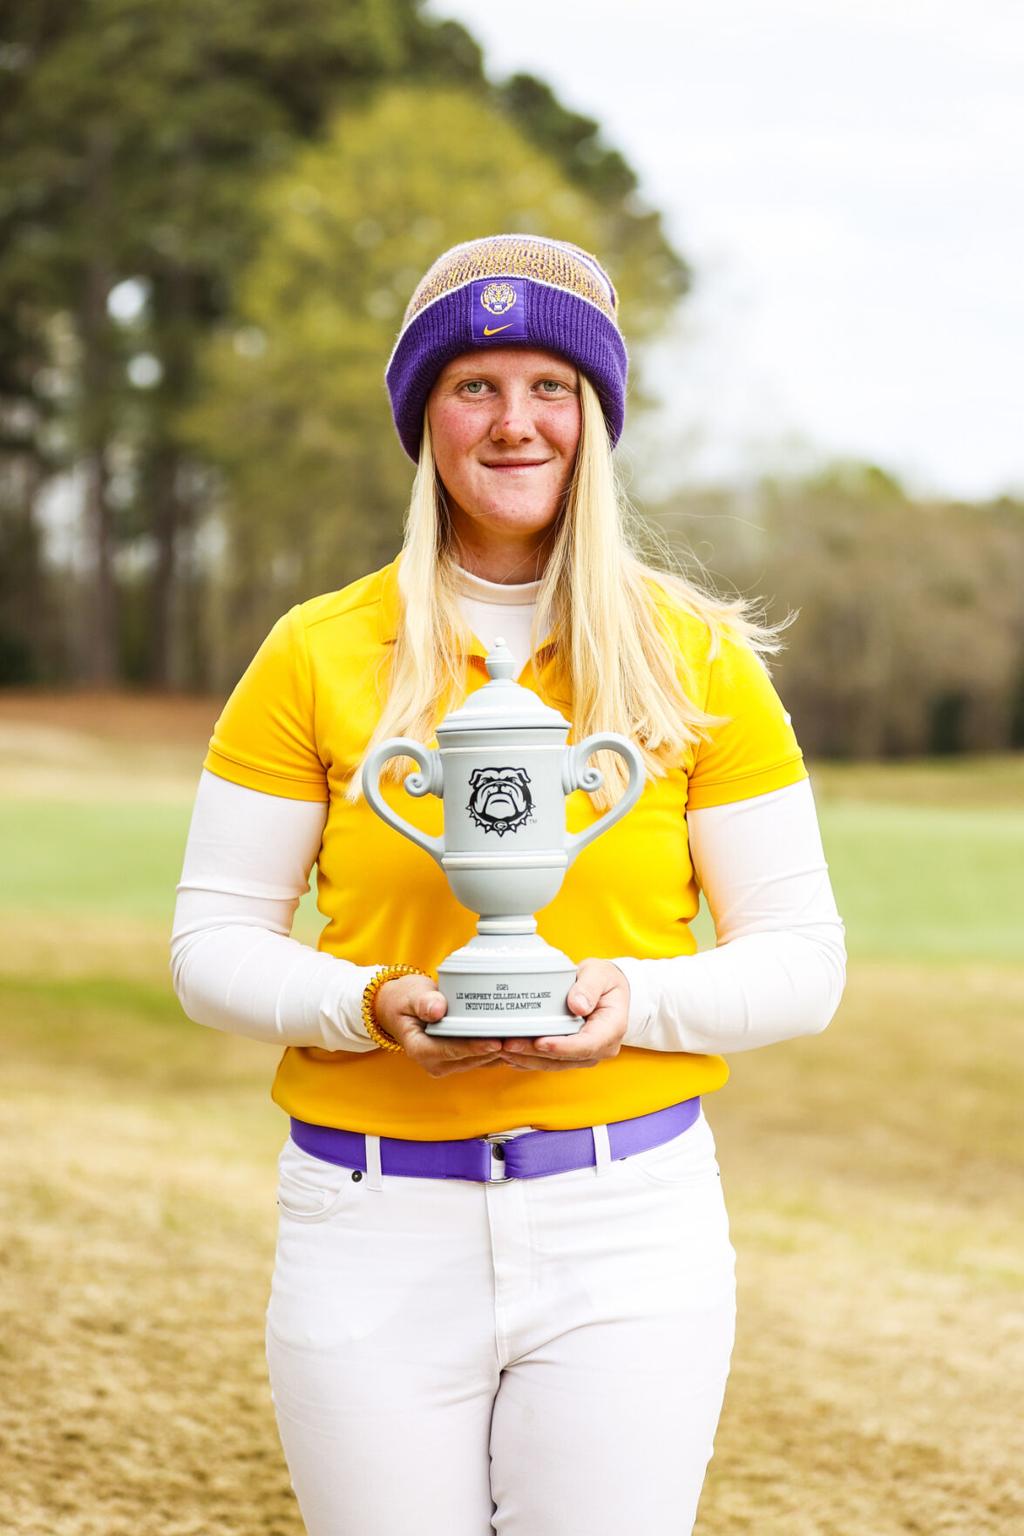 She's World No. 1!!!! LSU's Lindblad On Top Of World Amateur Golf